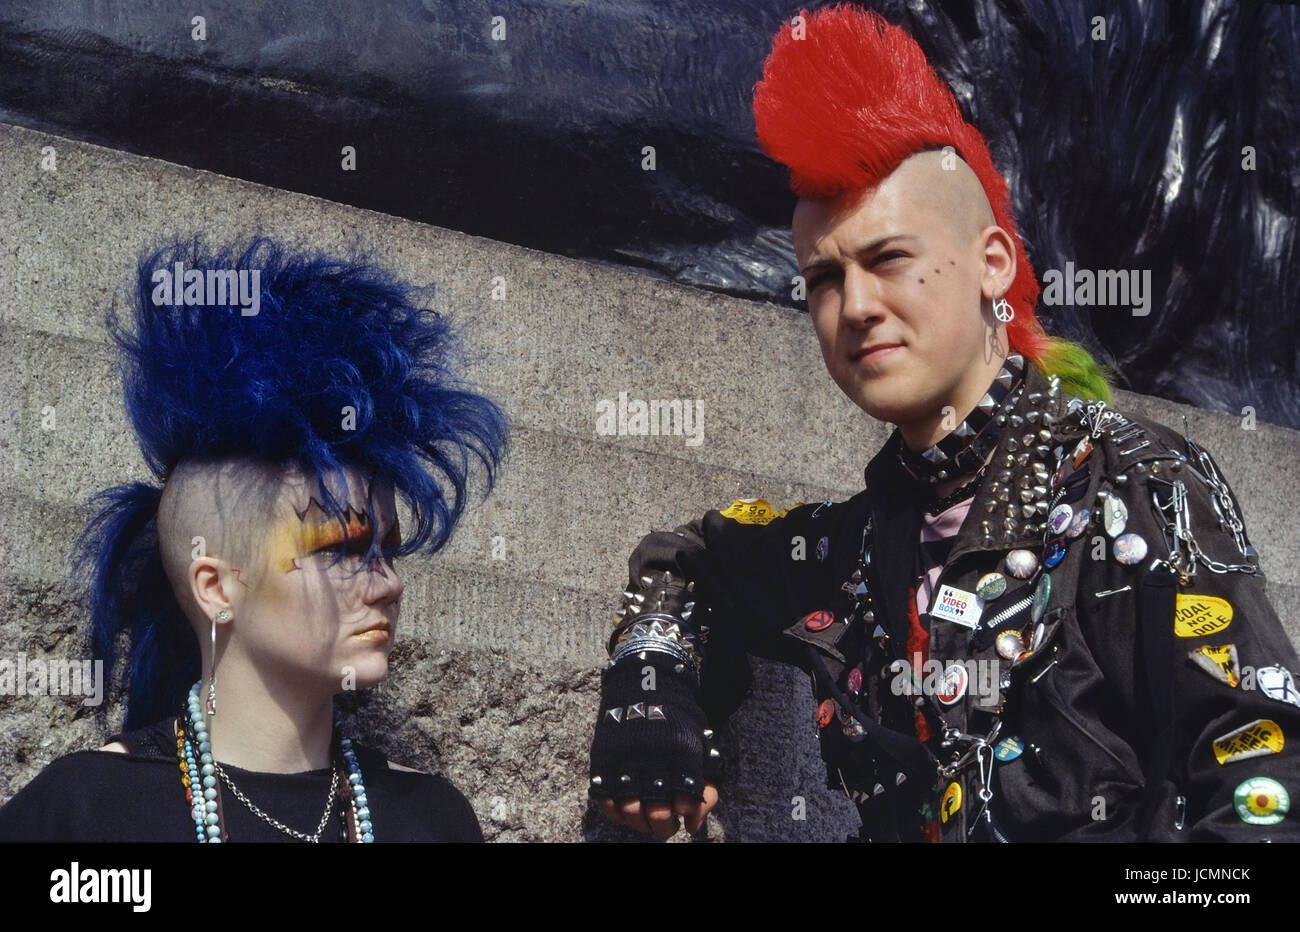 London punks circa 1980's Stock Photo - Alamy